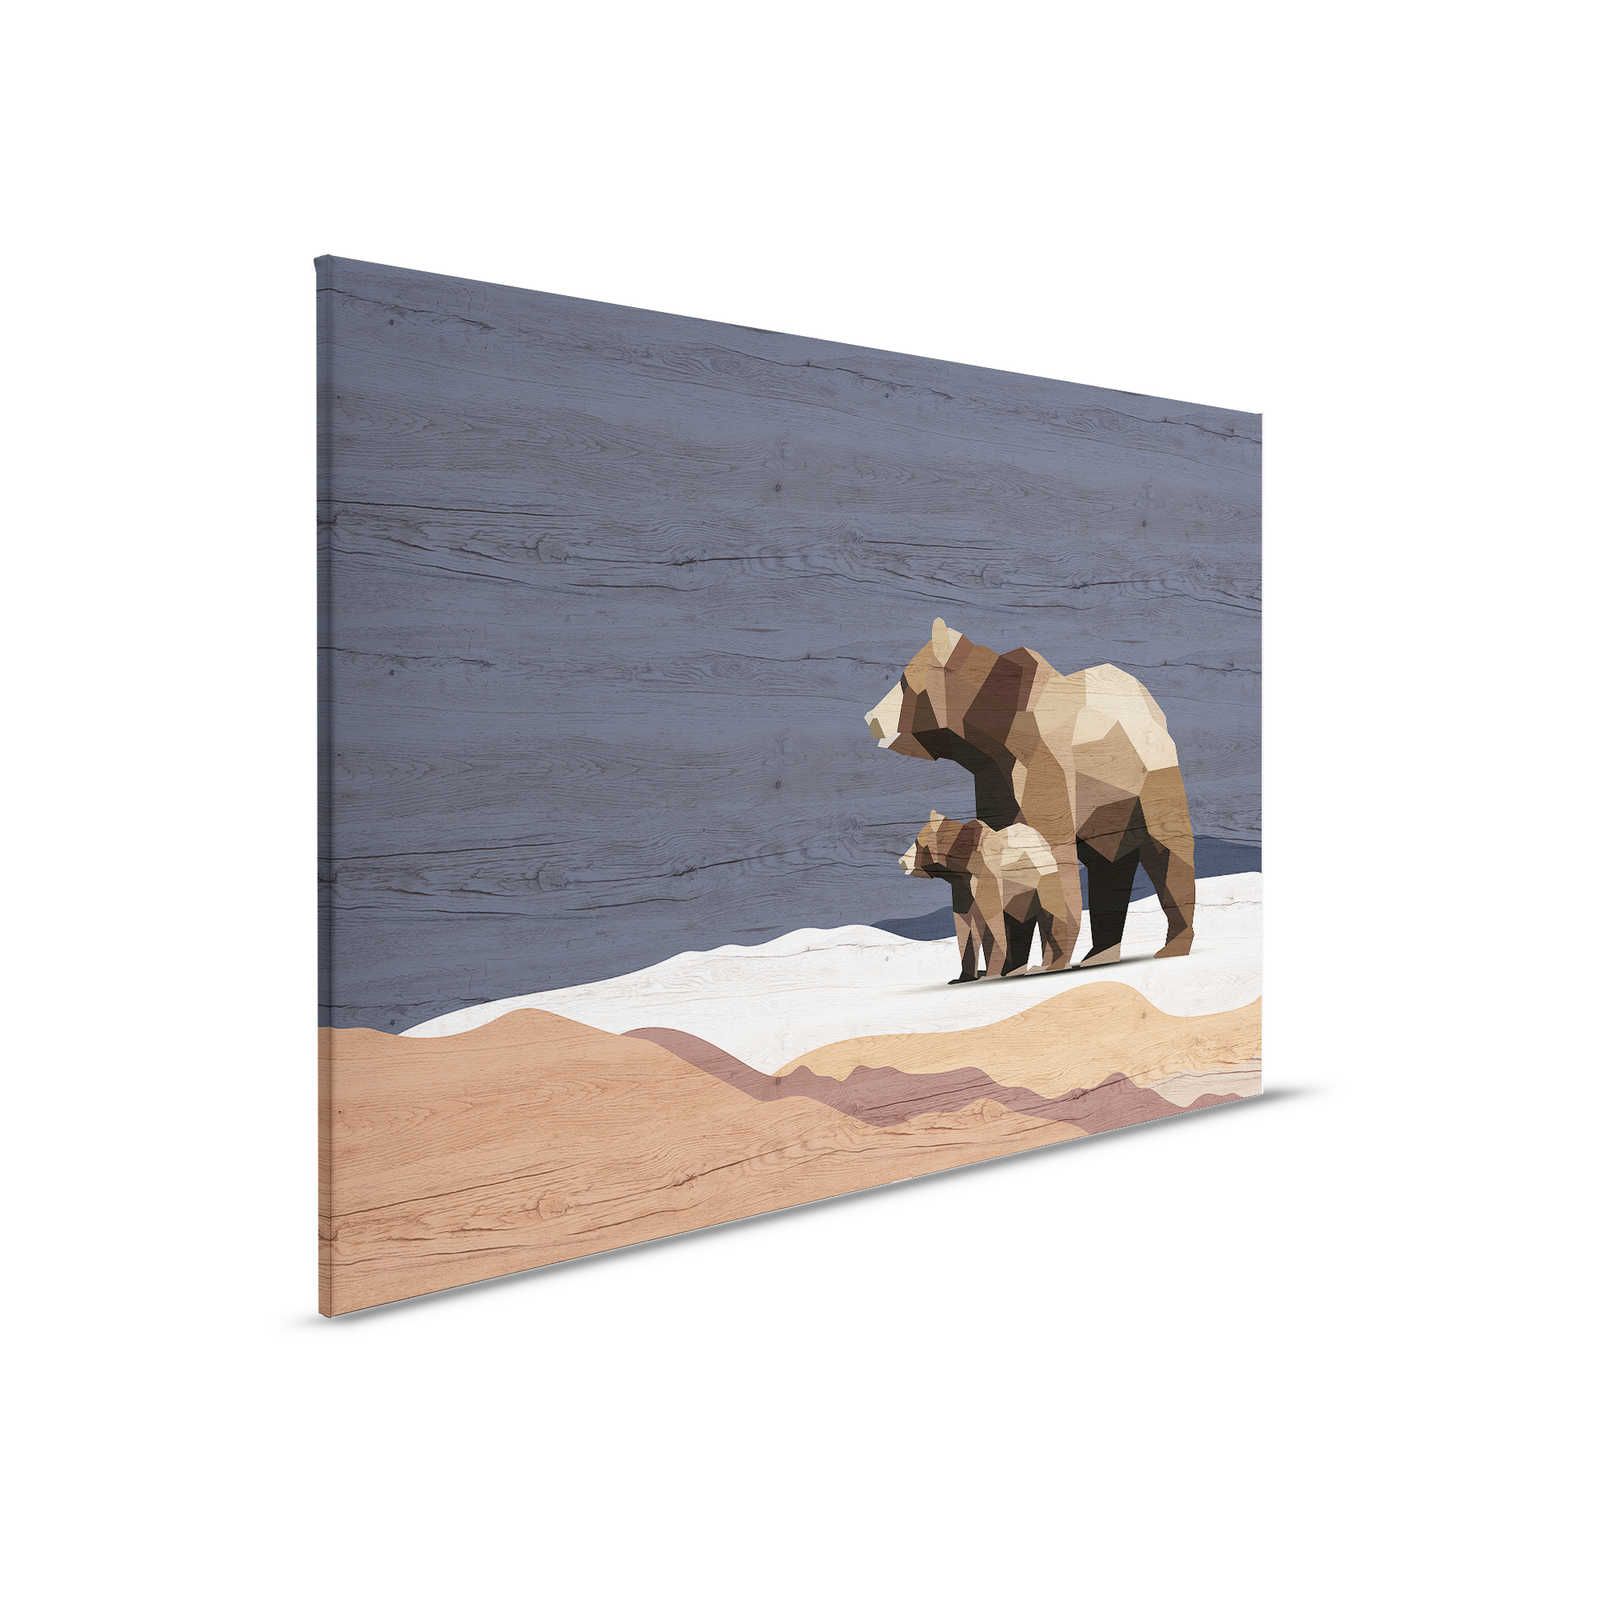 Yukon 3 - Leinwandbild Bären Familie im Facetten Design & Holzoptik – 0,90 m x 0,60 m
